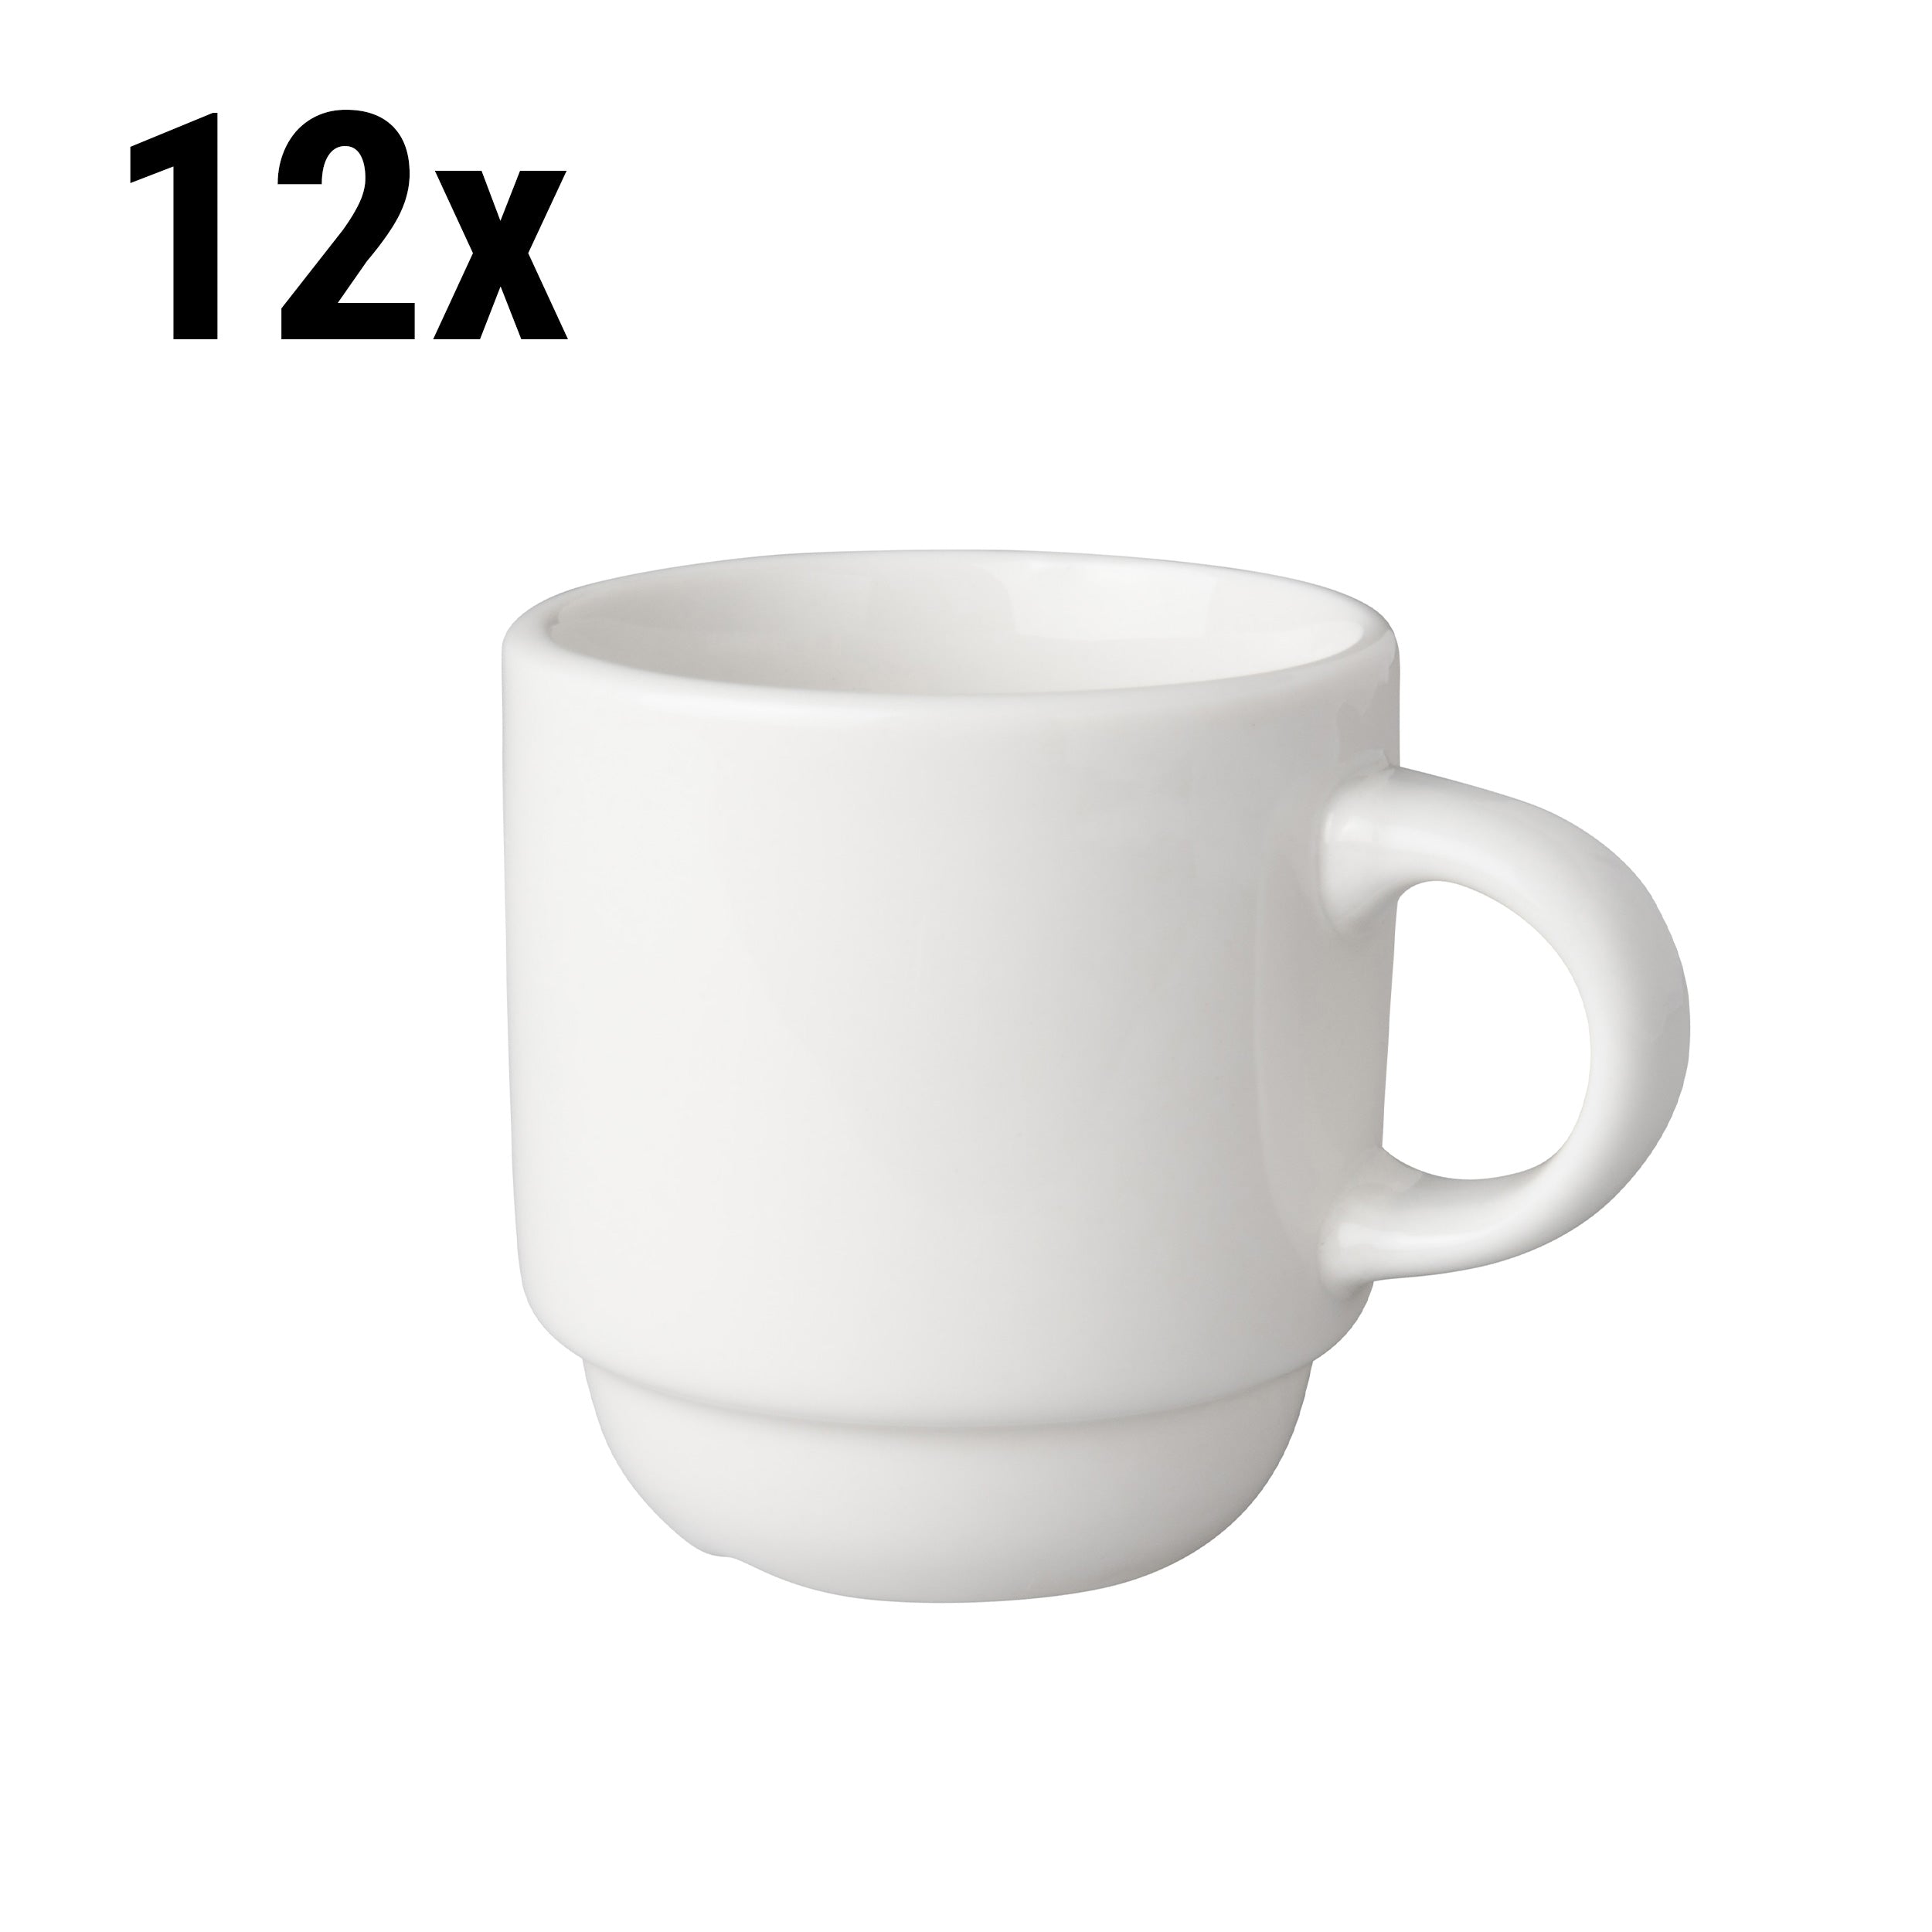 (12 stk.) Mammoet kaffekop - 14 cl - Hvid